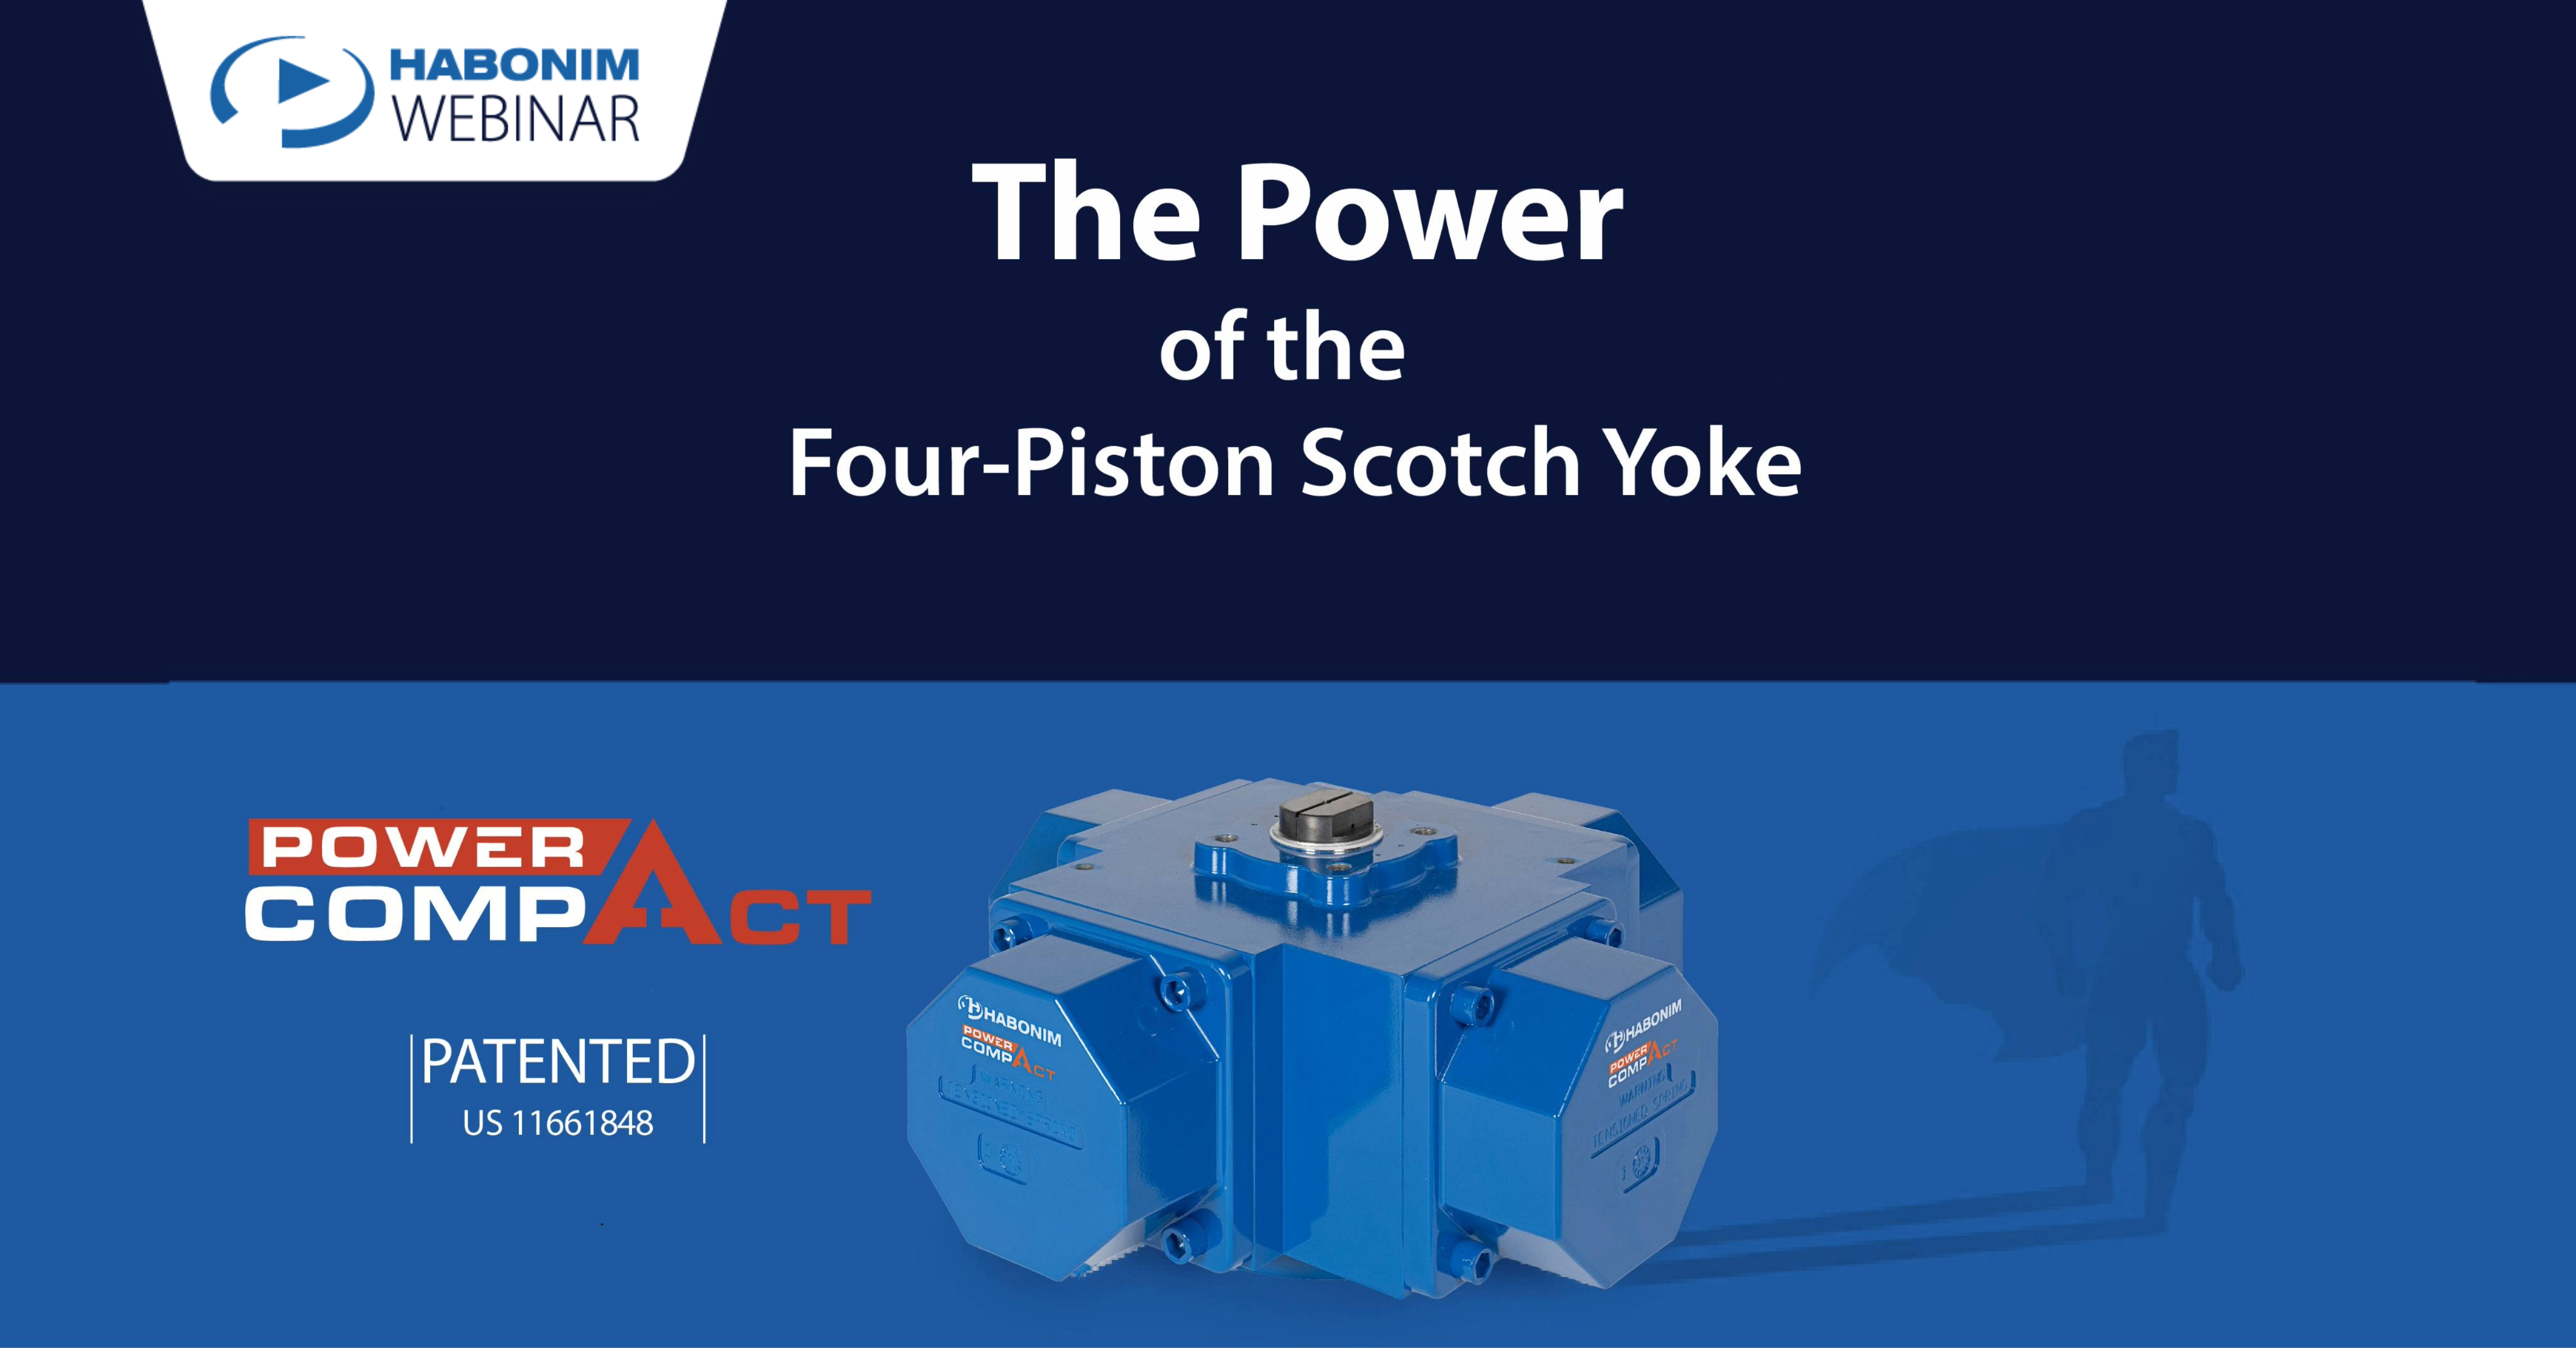 The Power of The Four-Piston Scotch Yoke